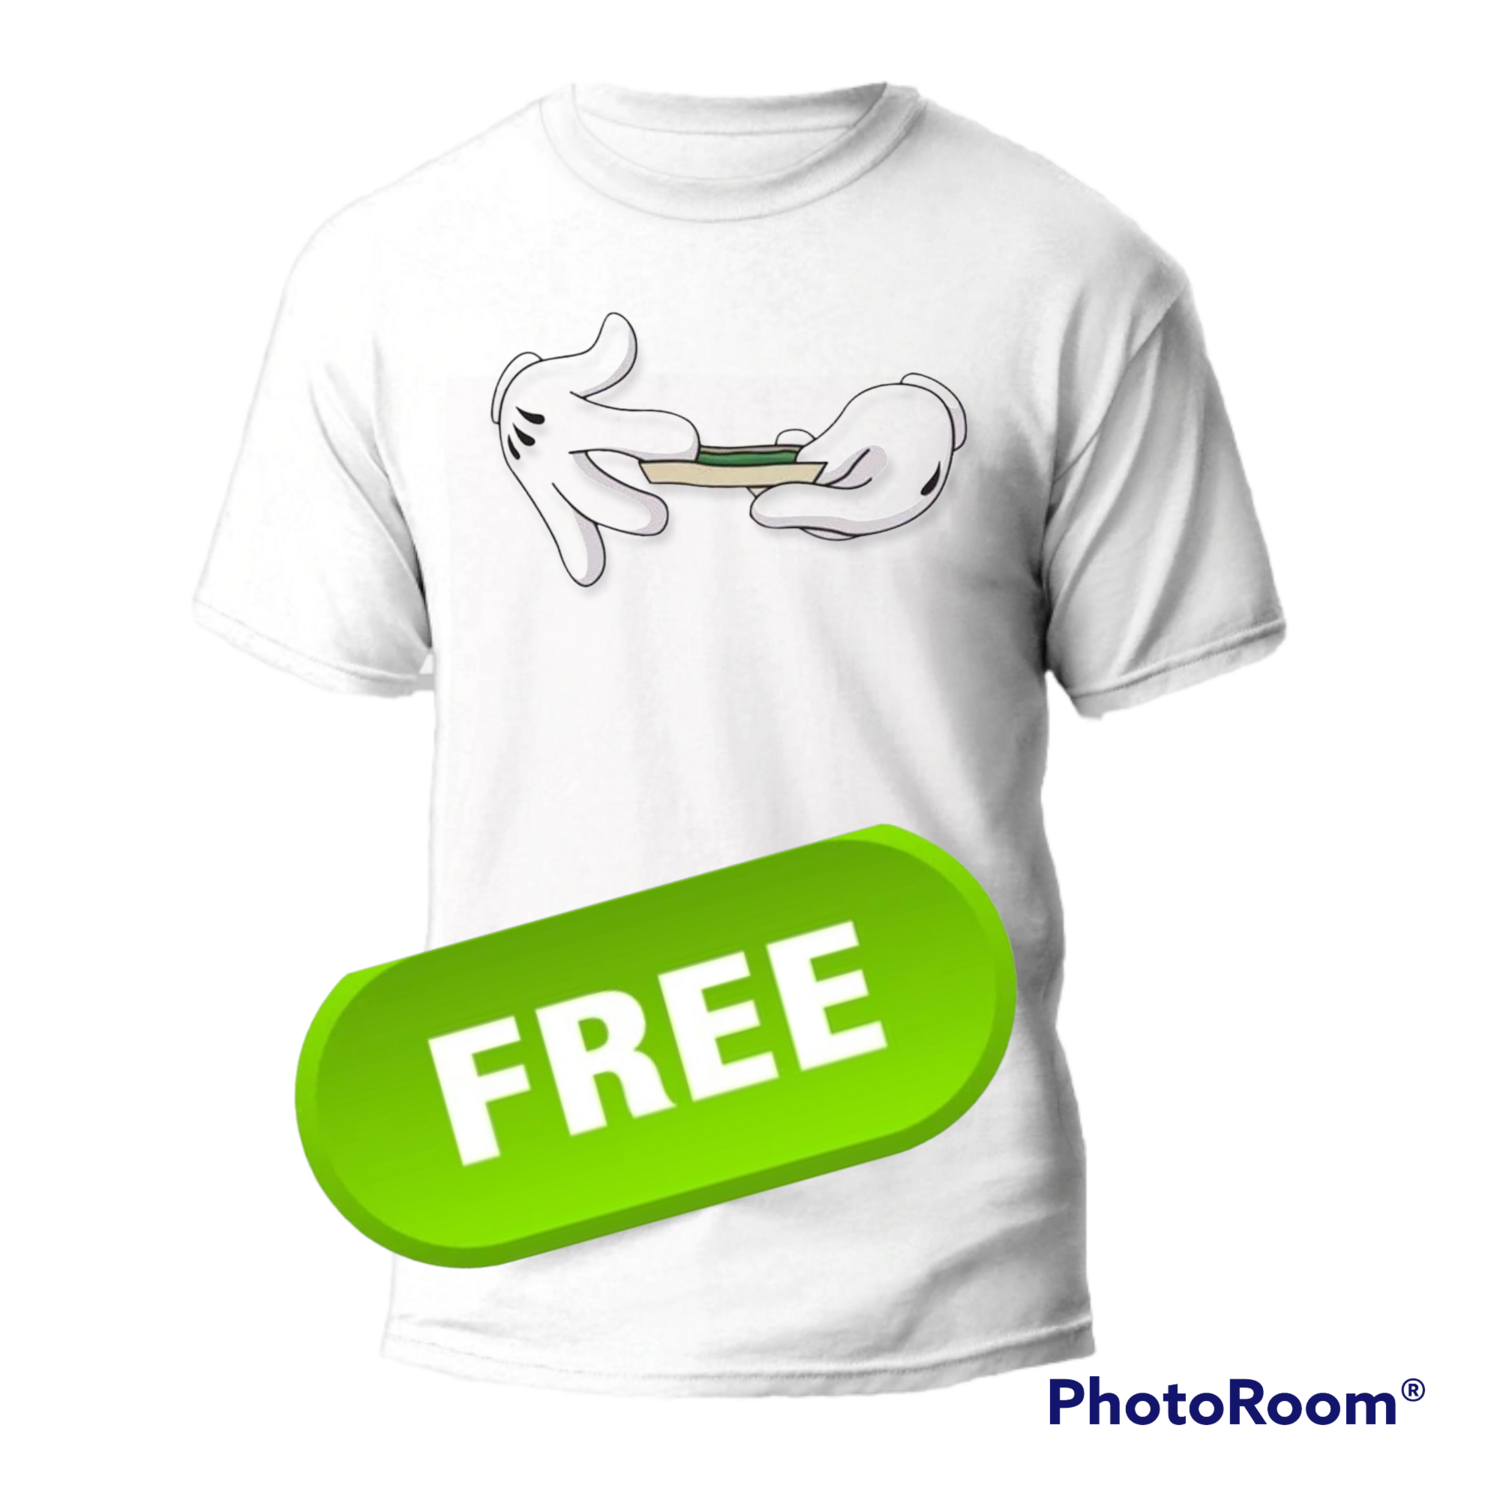 Free  2 hands free tee shirt